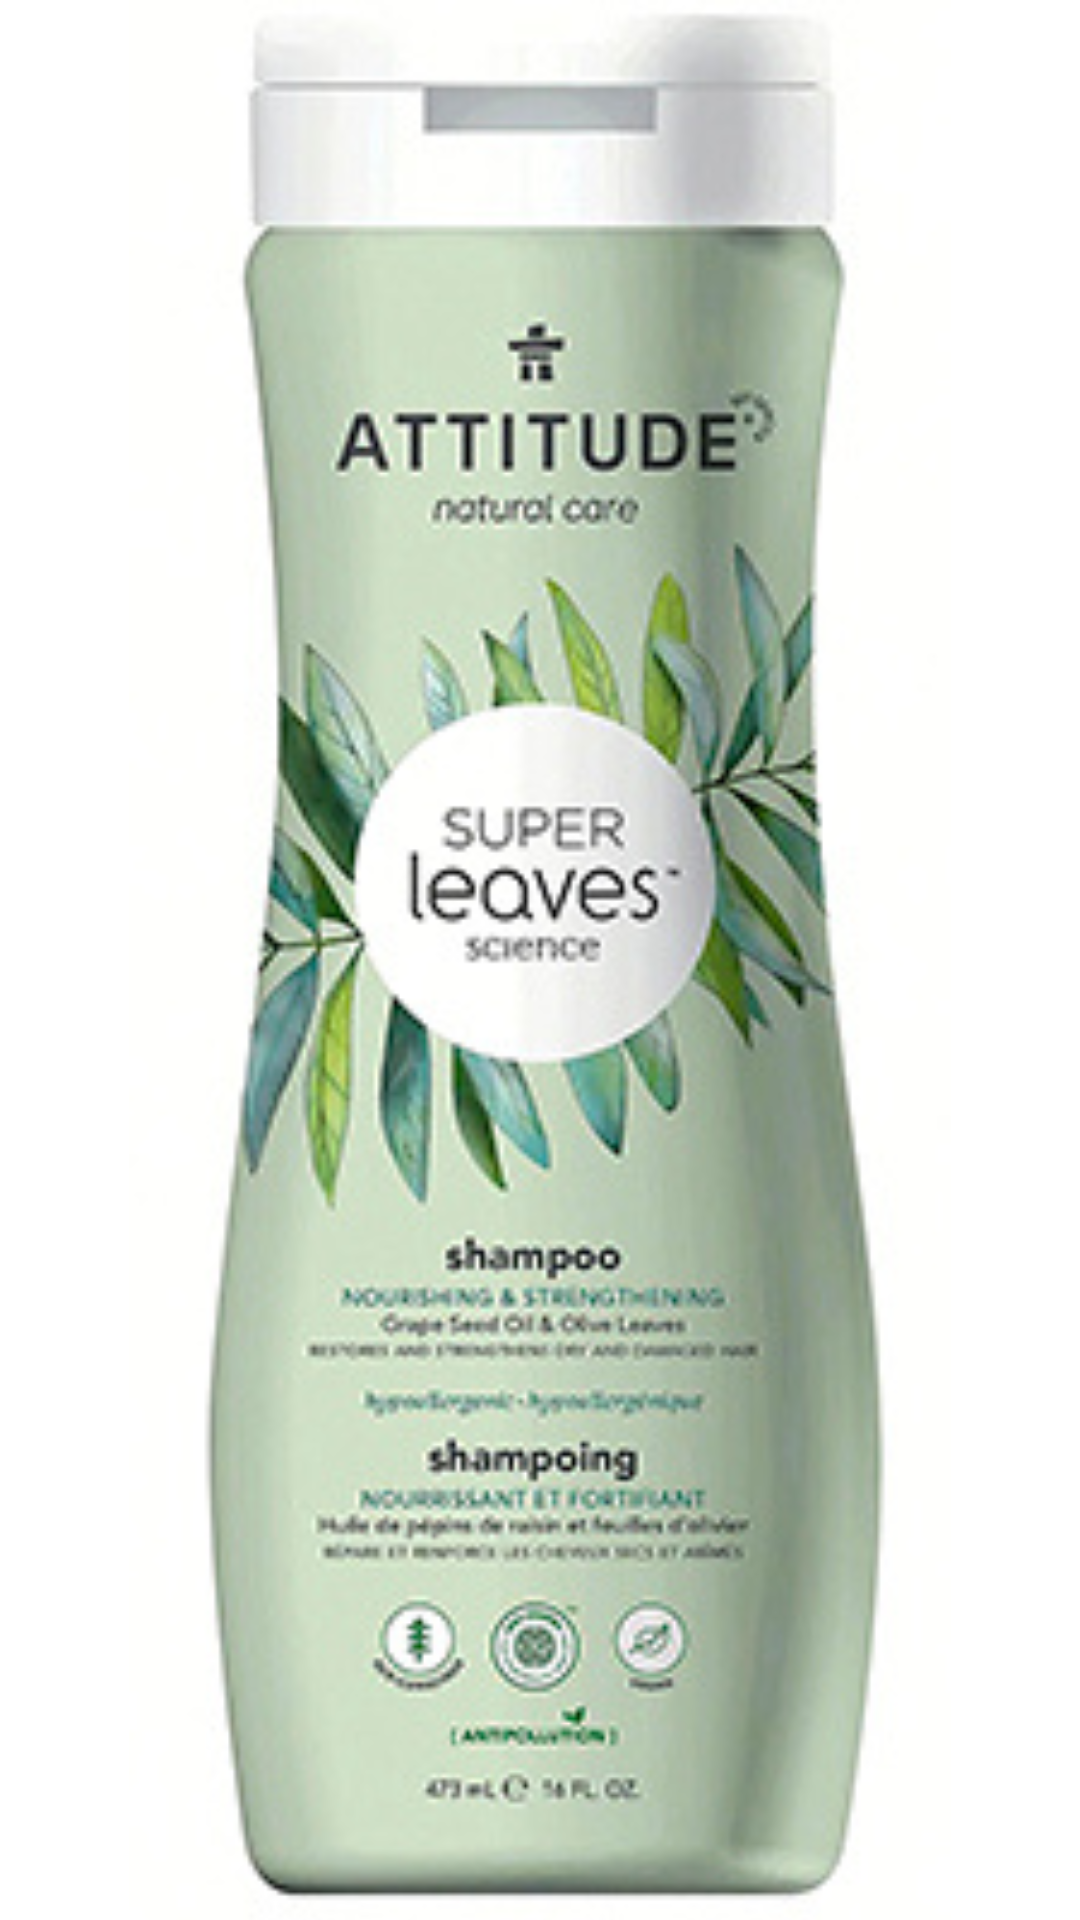 Attitude Natural Care Super Leaves, Nourishing & Strengthening shampoo